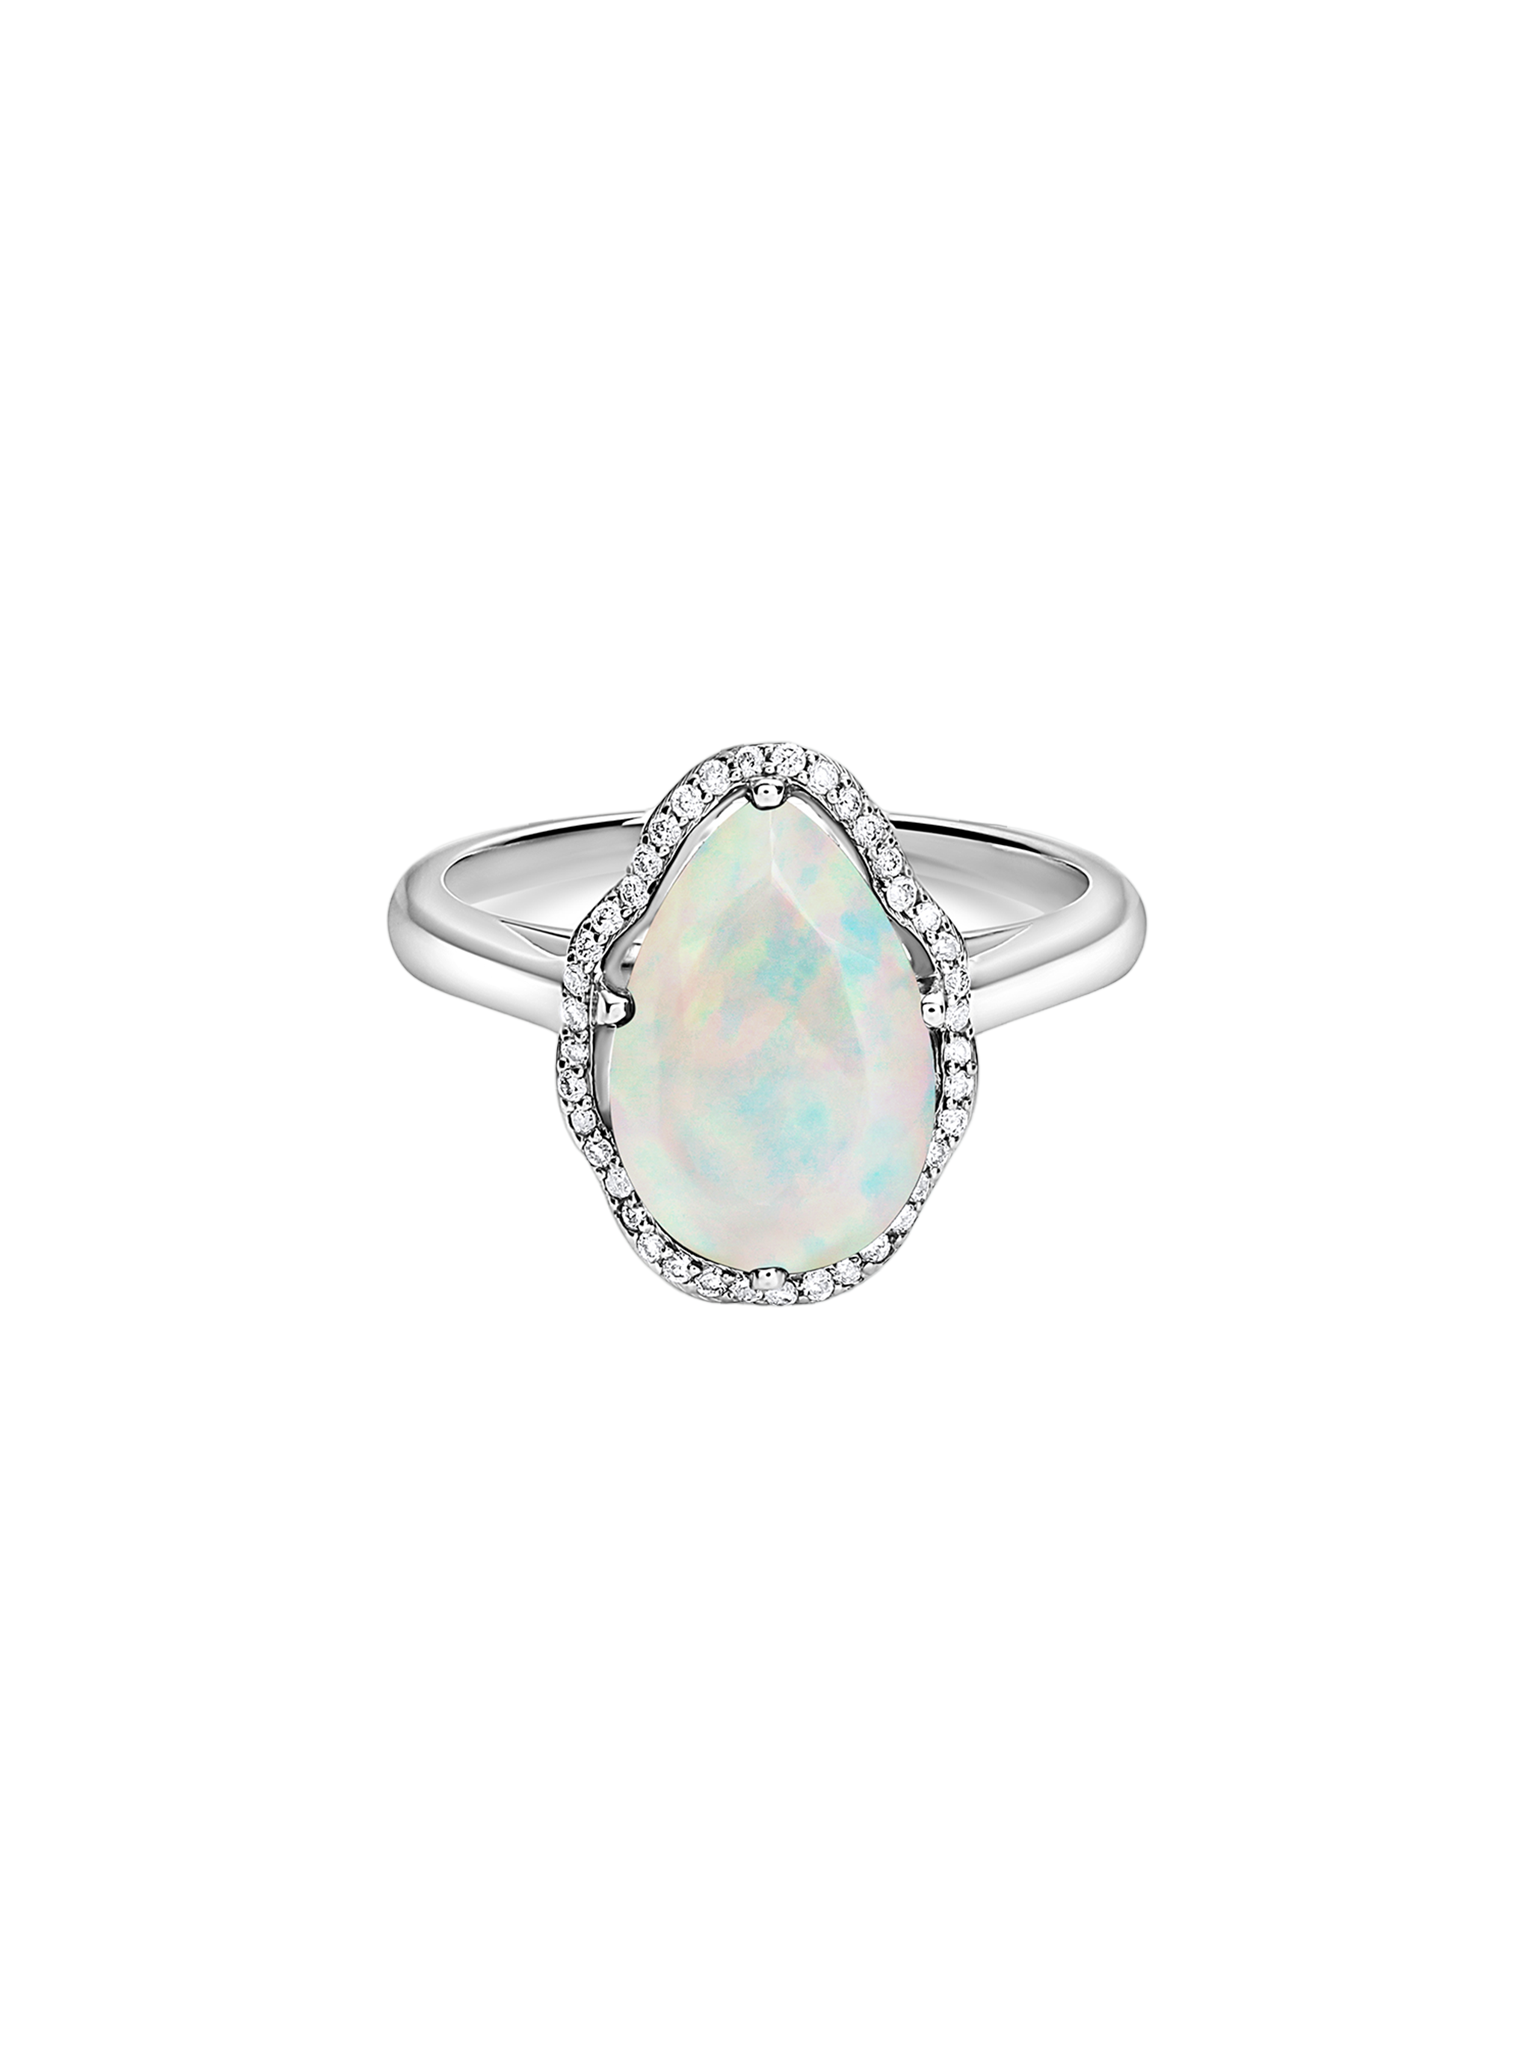 Glow ring ethiopian opal with diamonds